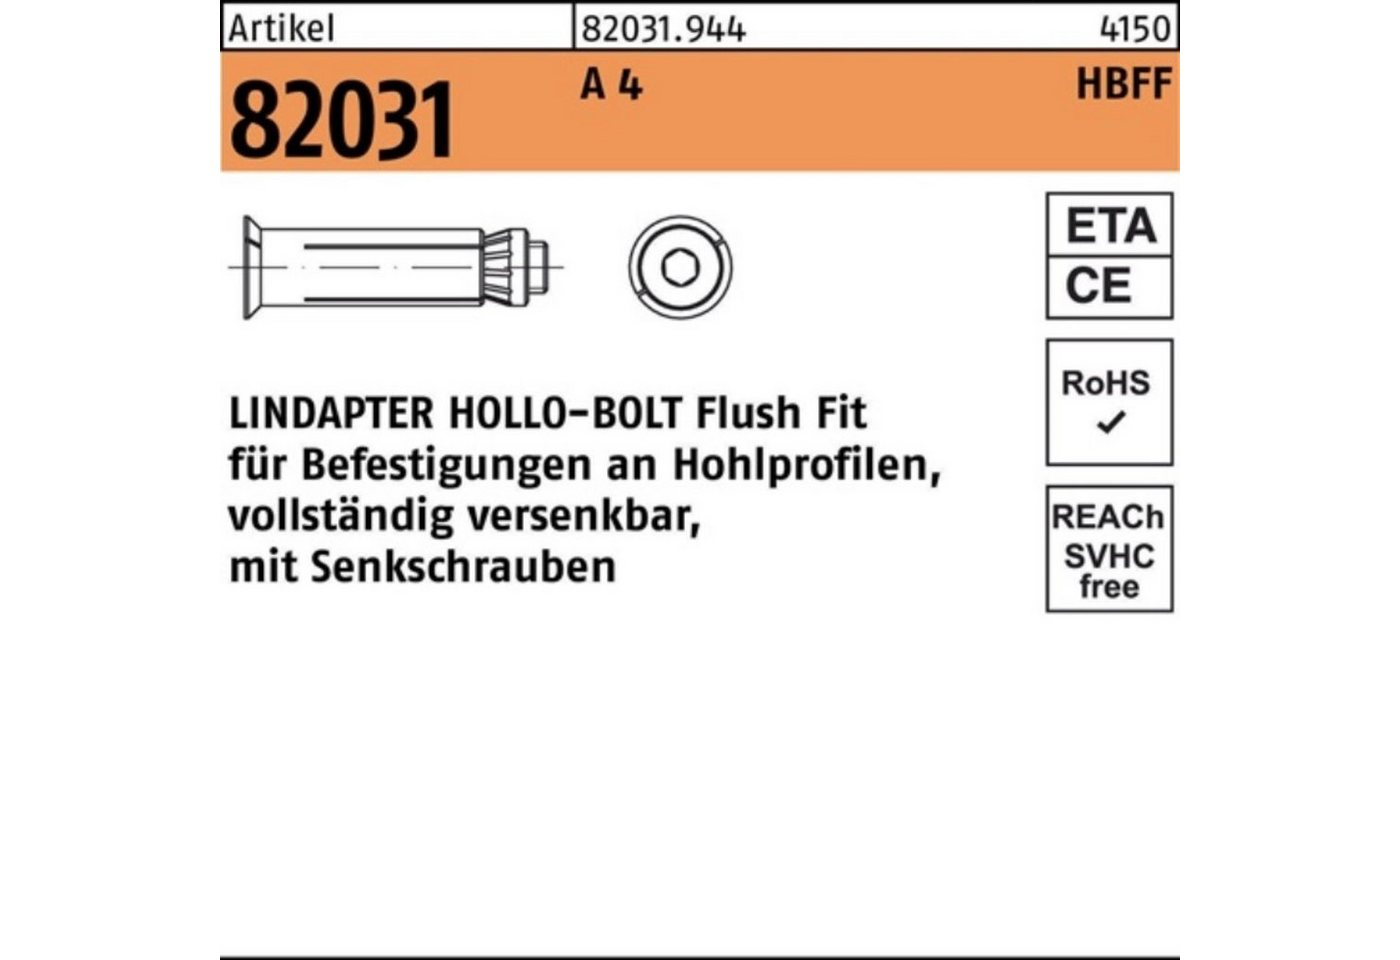 Lindapter Hohlraumdübel 100er Pack Hohlraumdübel R 82031 HBFF 12-2 (80/52) A 4 1 Stück Arti von Lindapter